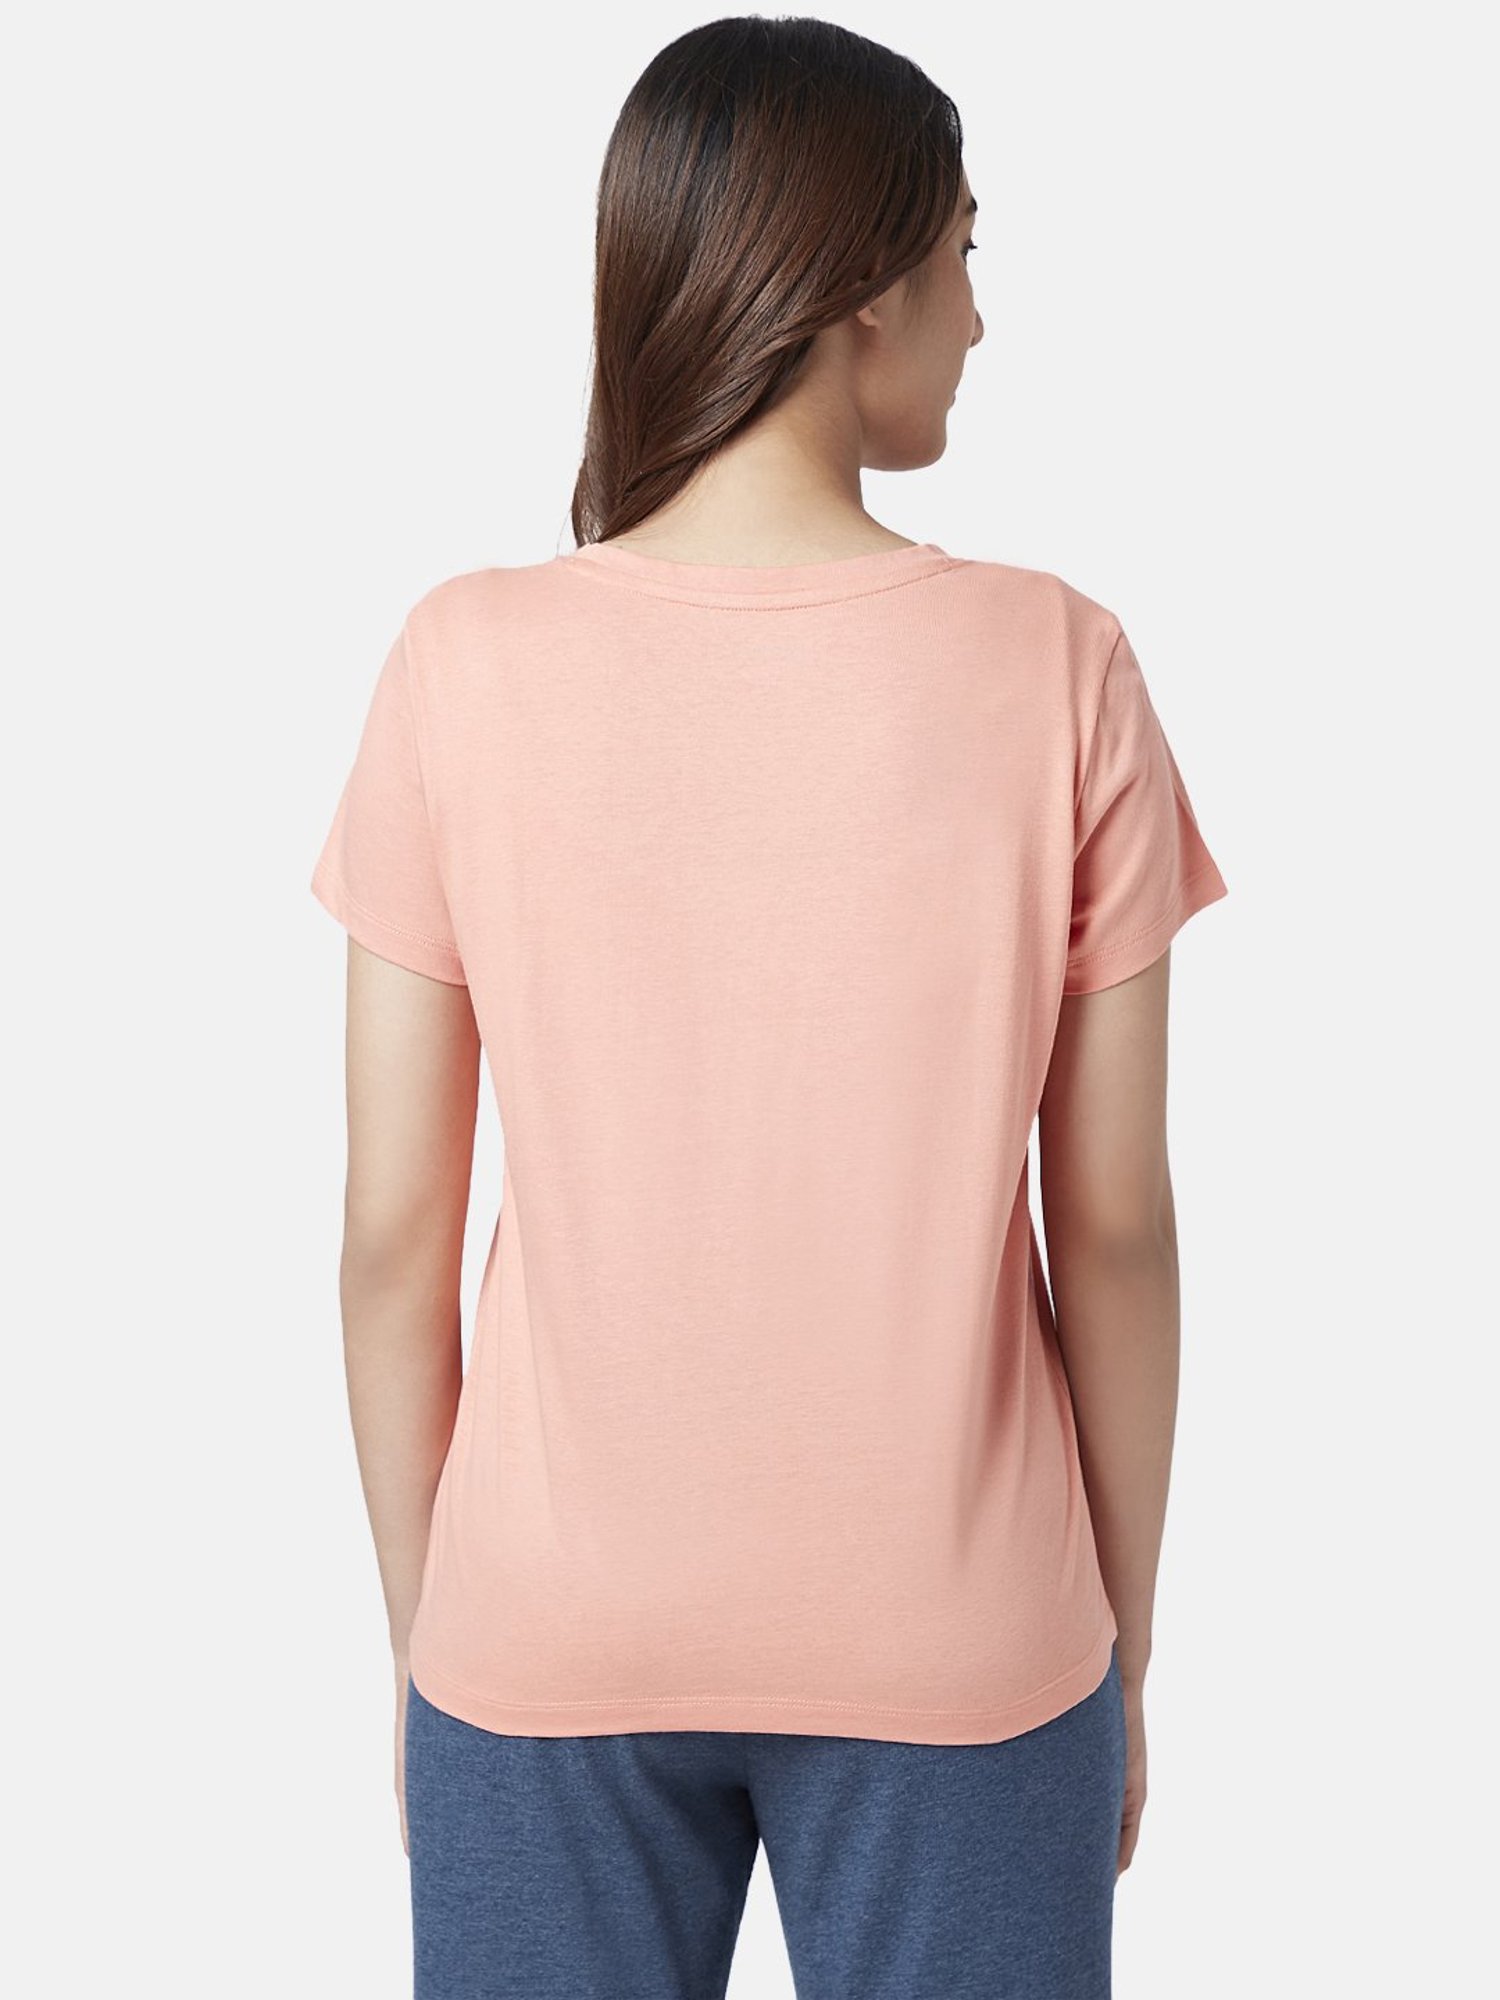 Dreamz by Pantaloons Pink Cotton T-Shirt